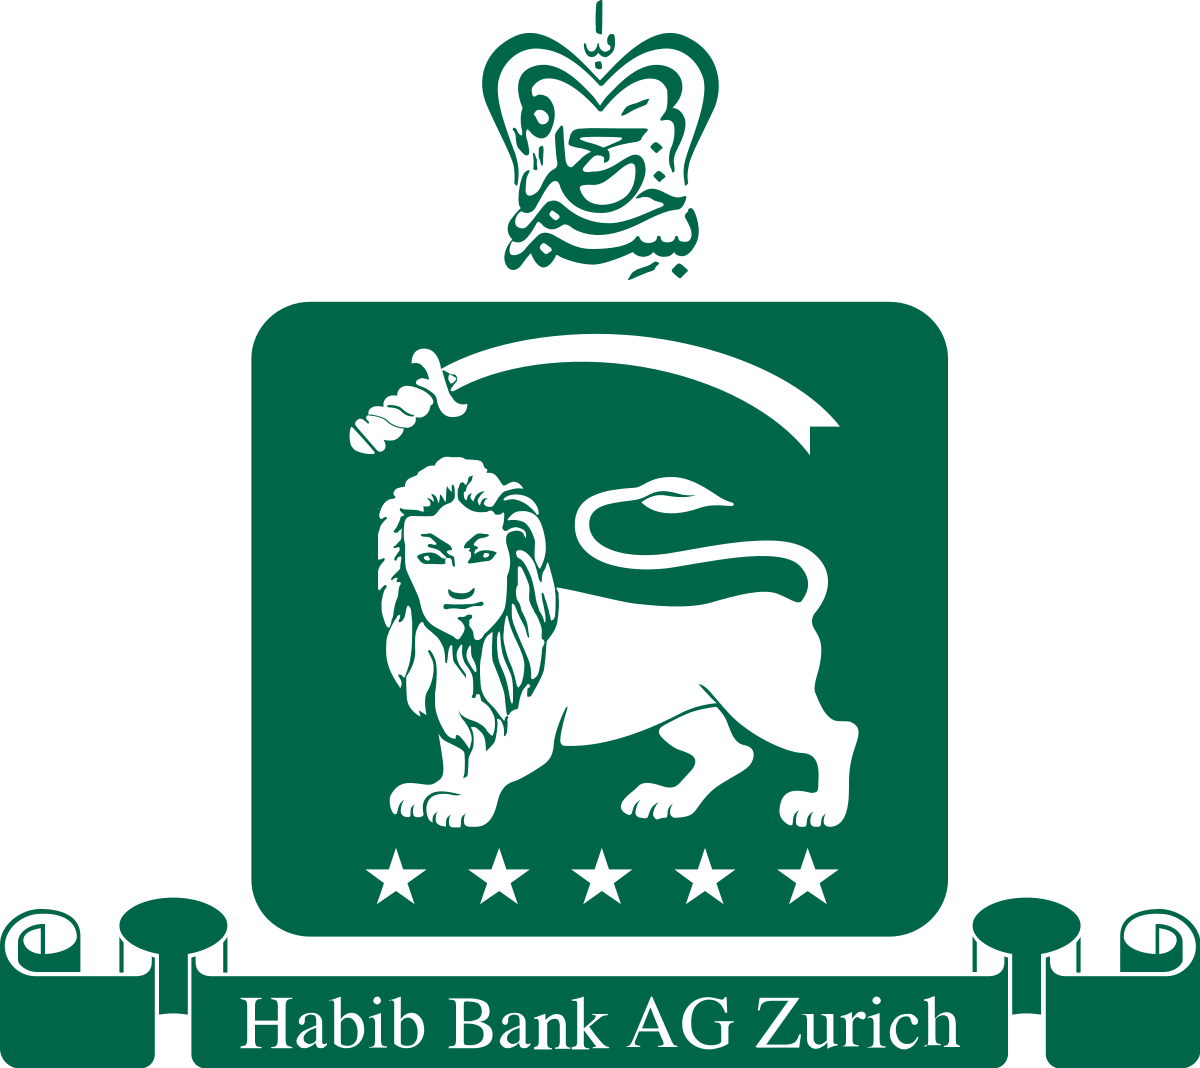 Habib Bank, Switzerland